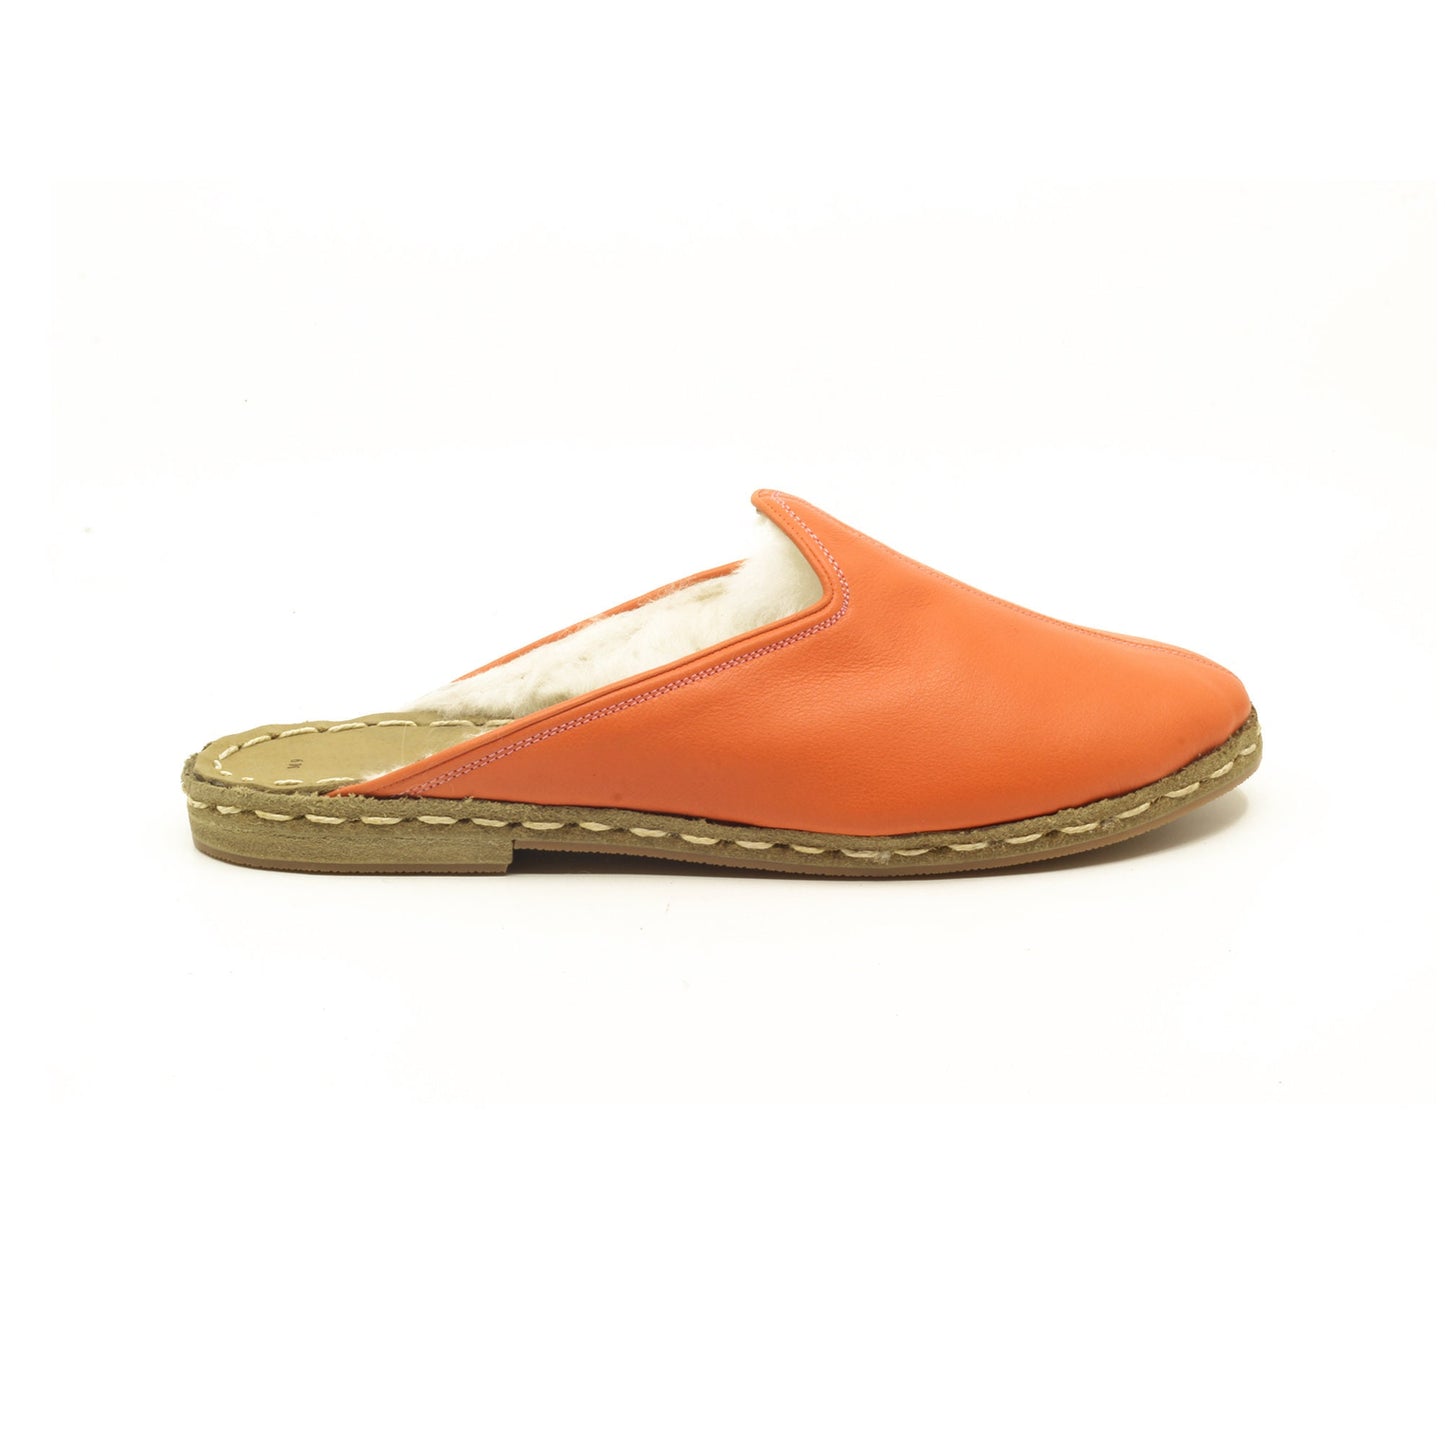 men's slippers handmade tuscan furry orange genuine leather outdoor spring summer – nefesshoes